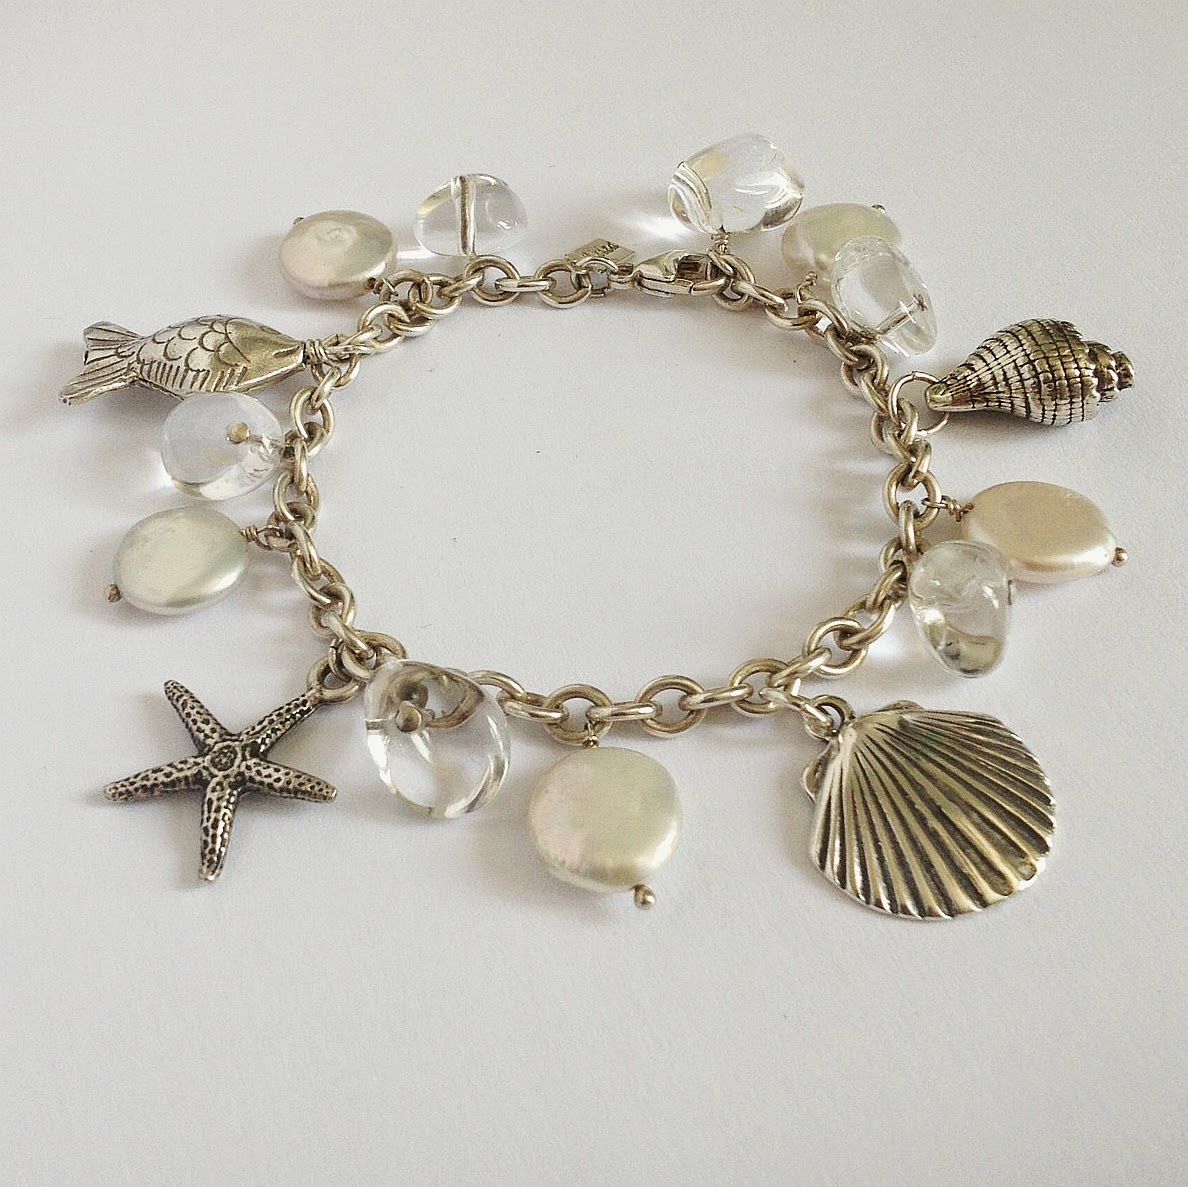 https://www.etsy.com/listing/191254500/beach-bracelet-clamshell-starfish-conch